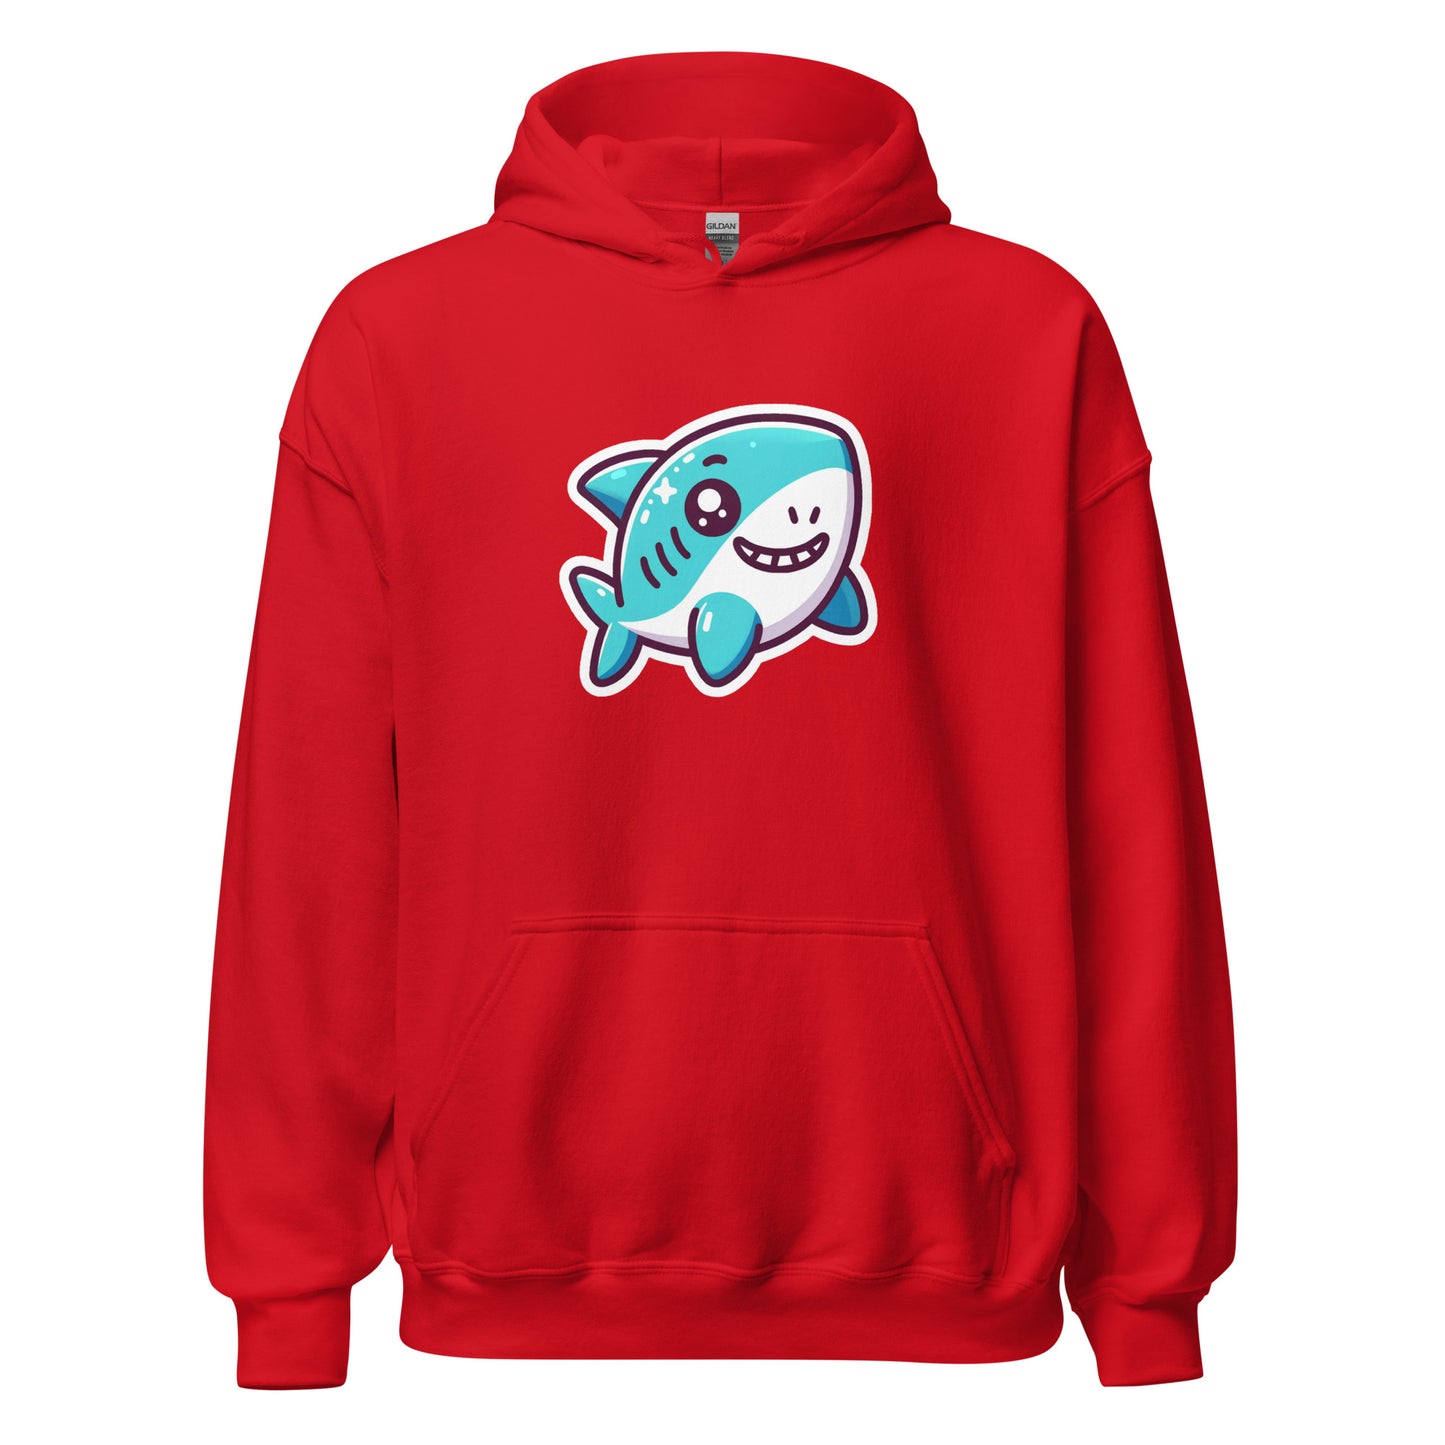 Cool Shark Unisex Hoodie Sweatshirt